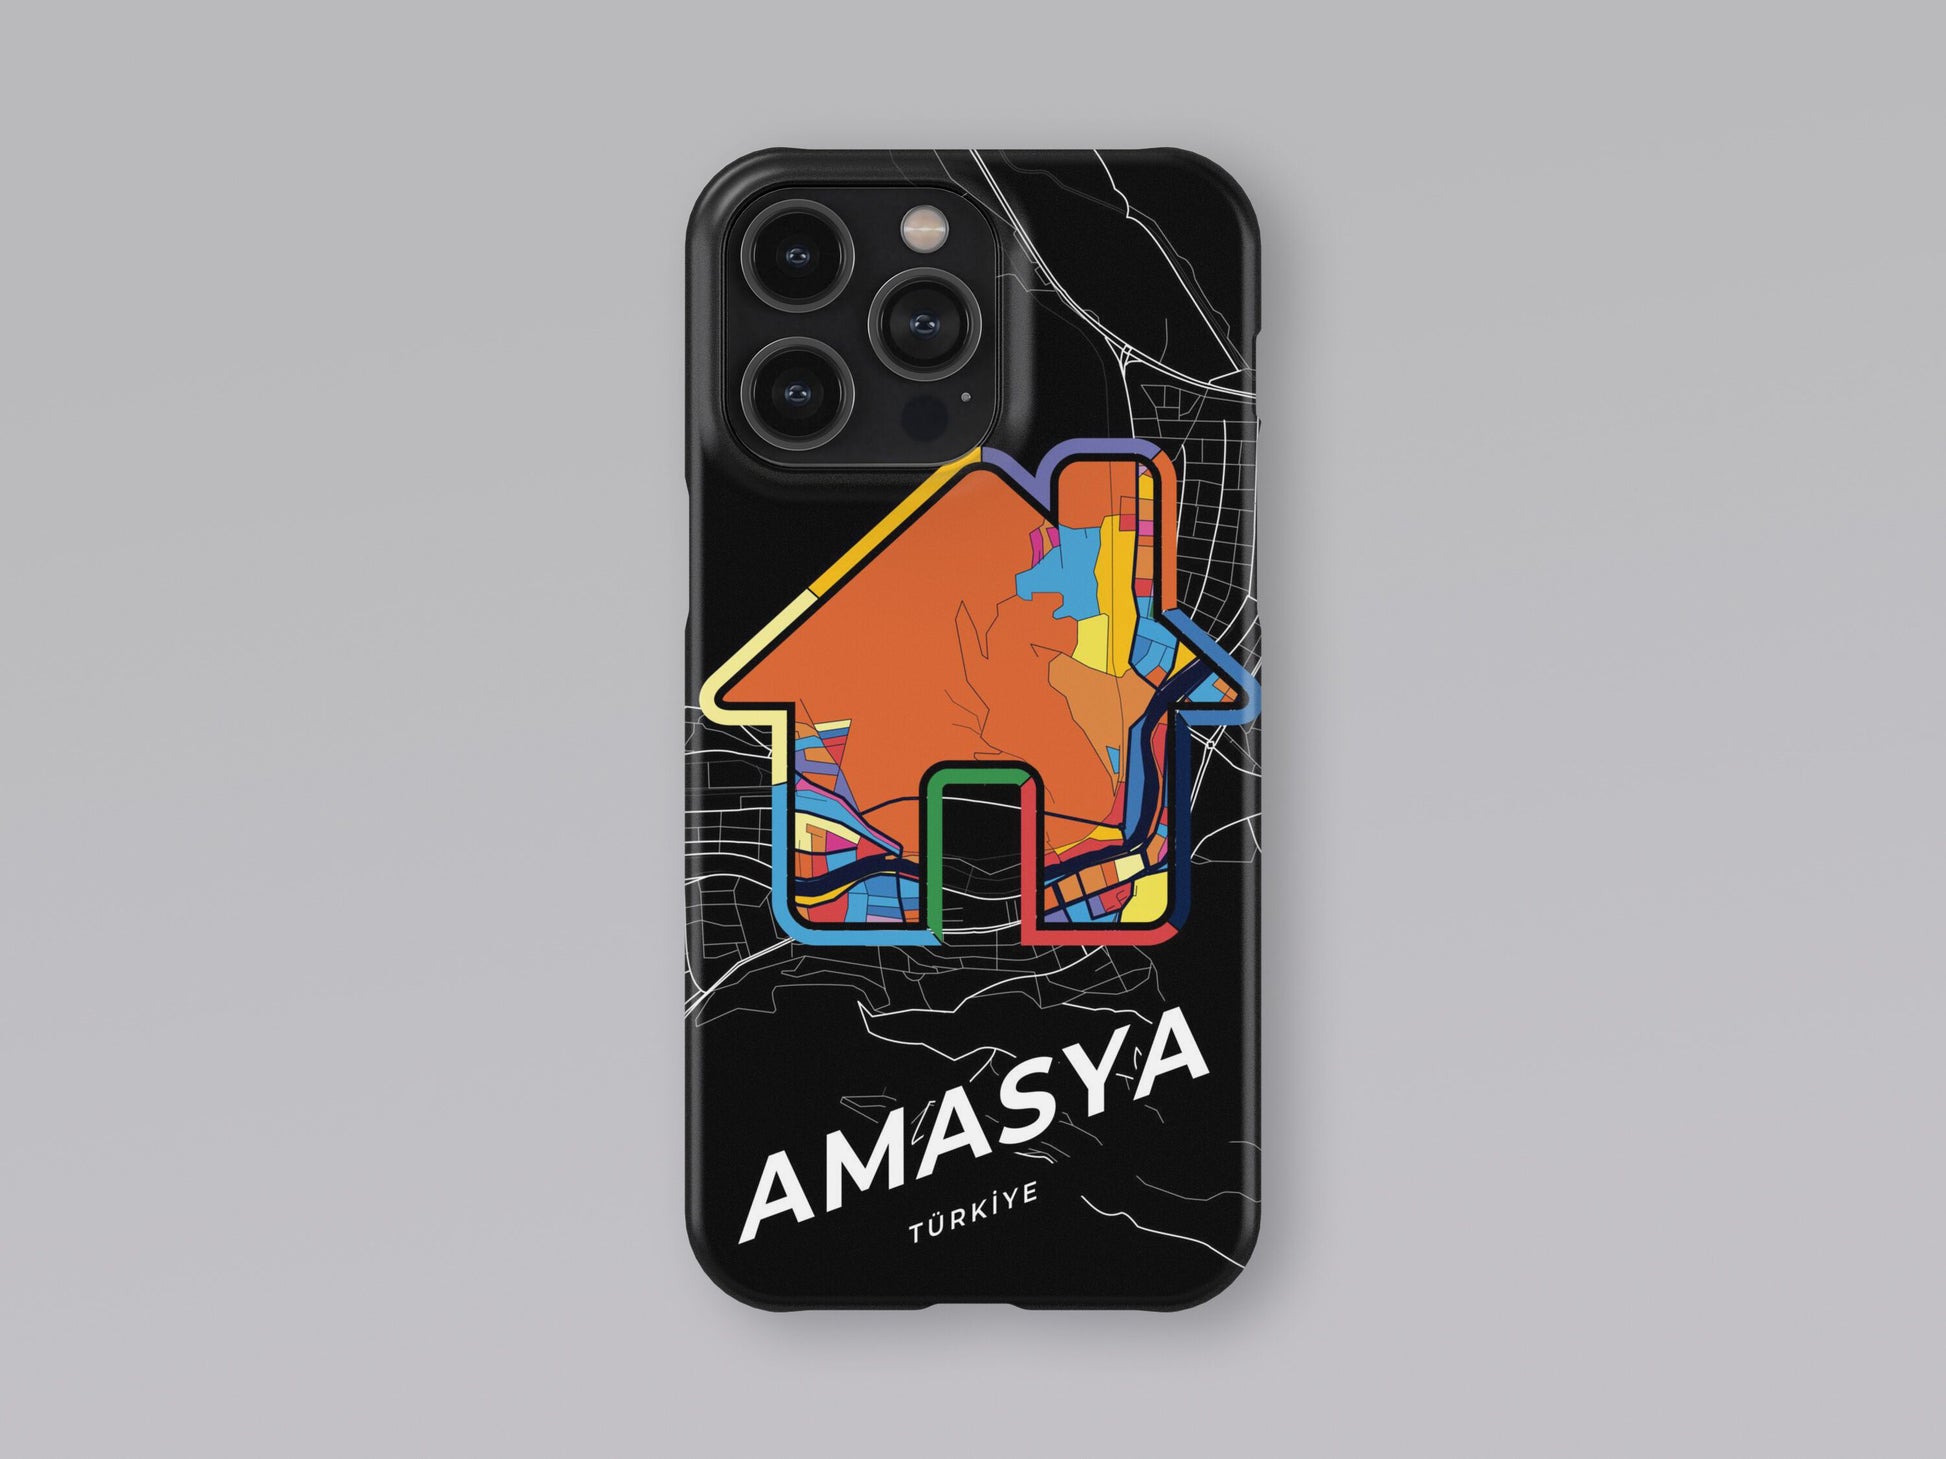 Amasya Turkey slim phone case with colorful icon. Birthday, wedding or housewarming gift. Couple match cases. 3